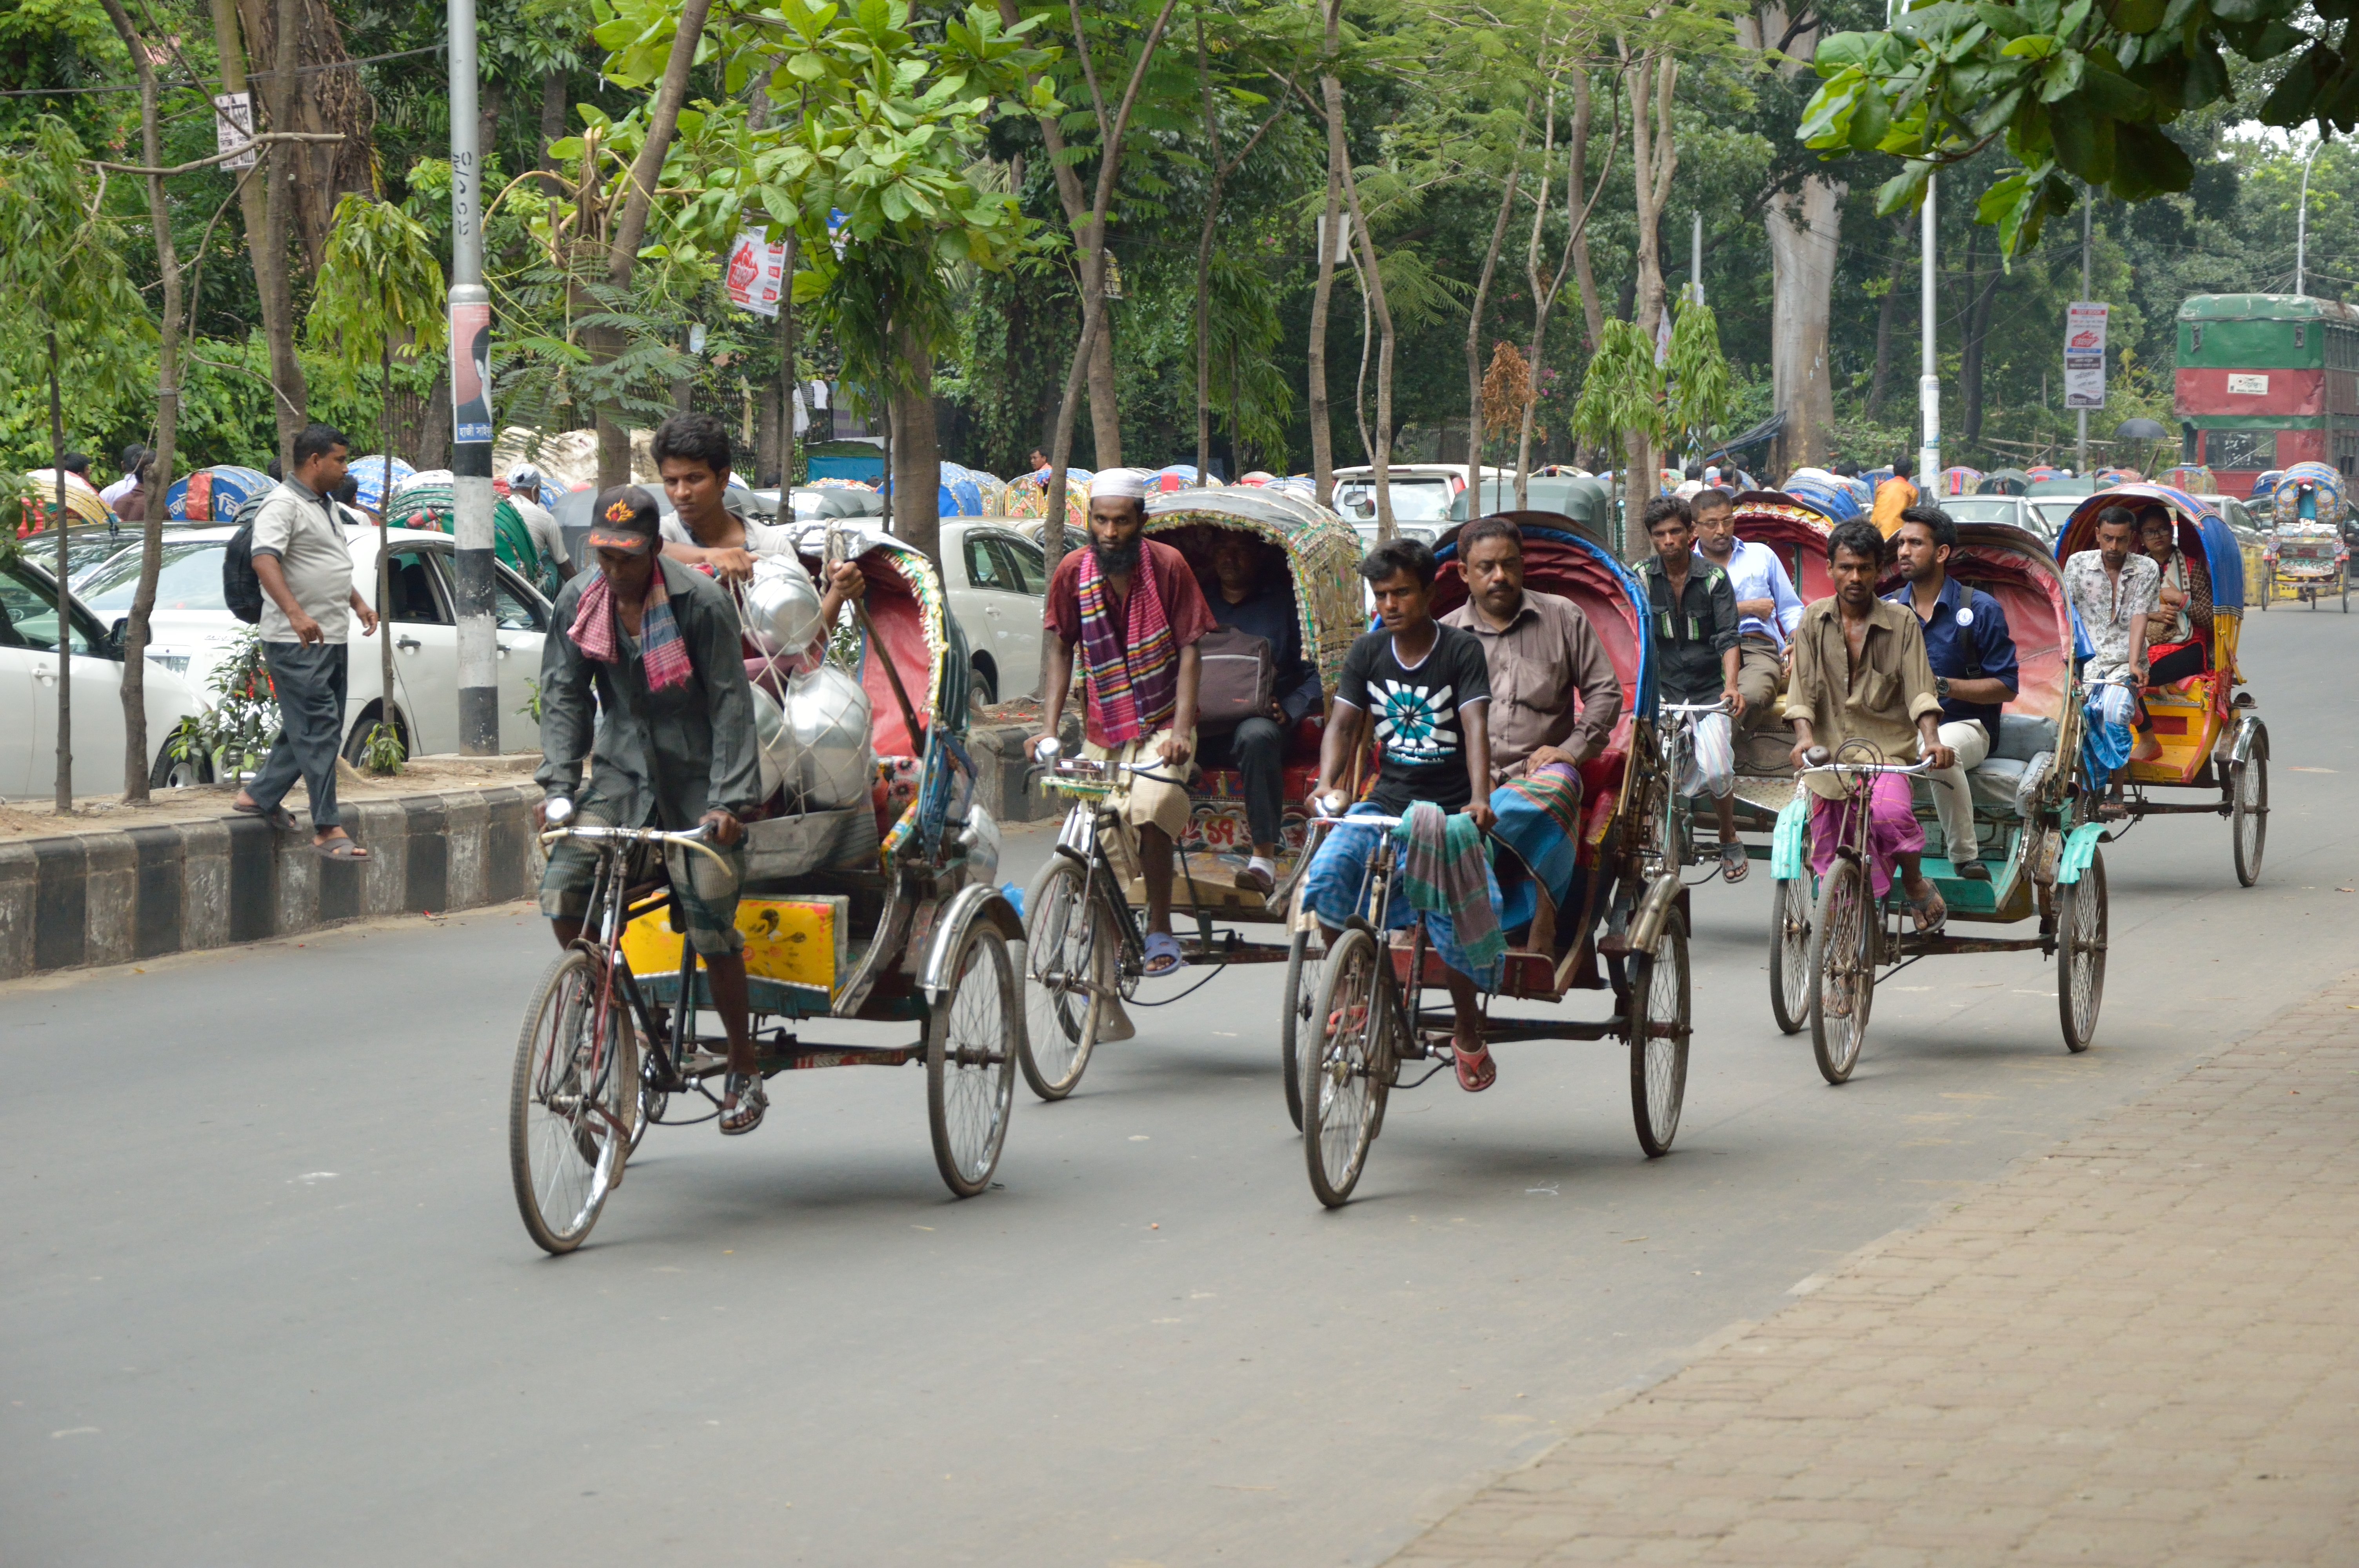 Auto rickshaw - Wikipedia